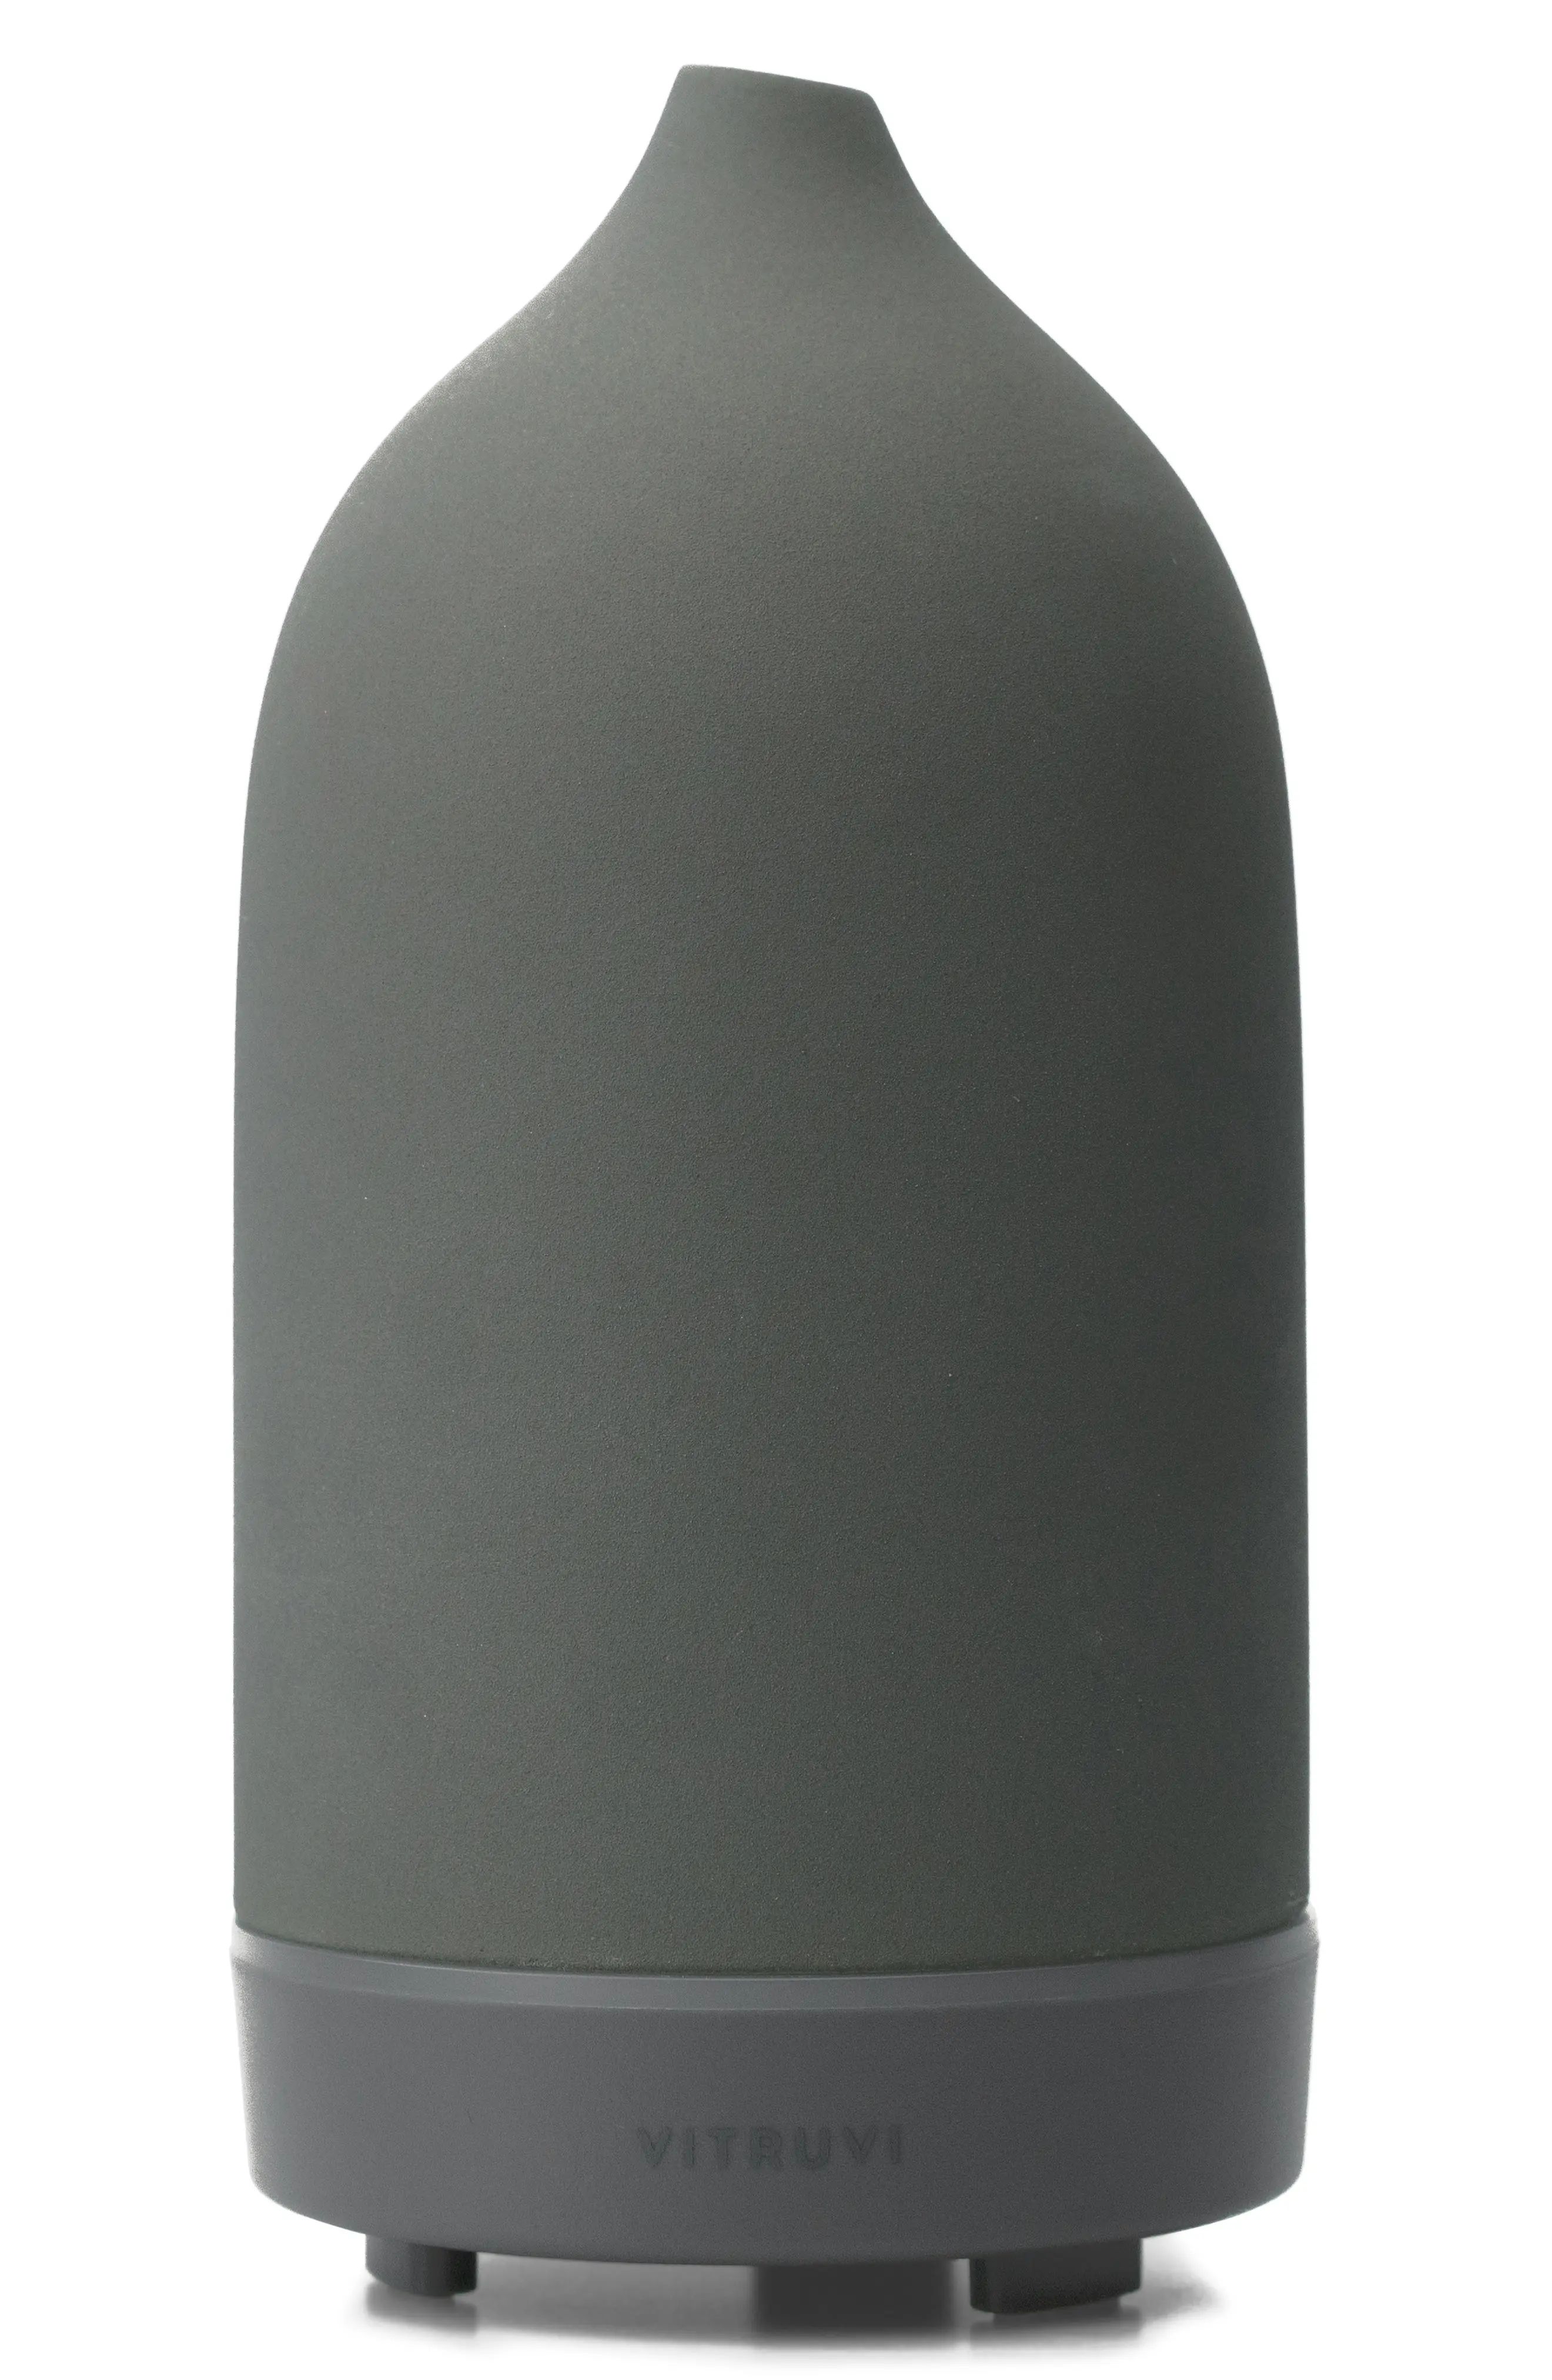 Vitruvi Porcelain Essential Oil Diffuser, Size One Size - Grey | Nordstrom